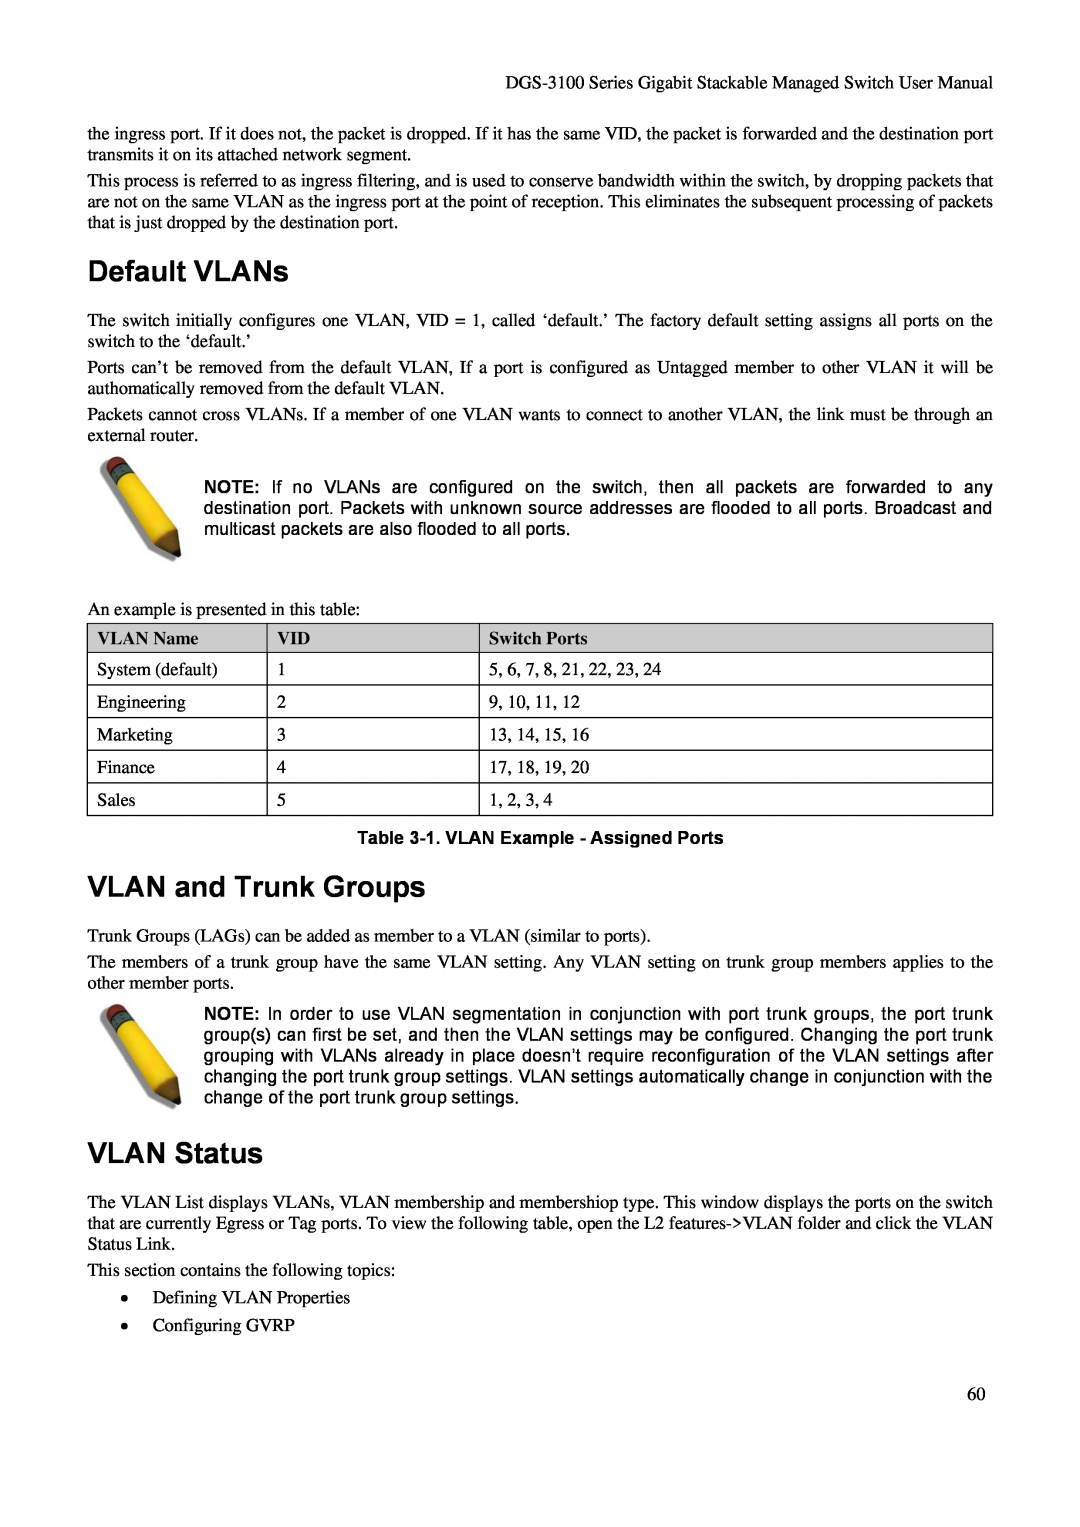 D-Link DGS-3100 user manual Default VLANs, VLAN and Trunk Groups, VLAN Status, VLAN Name, Switch Ports 